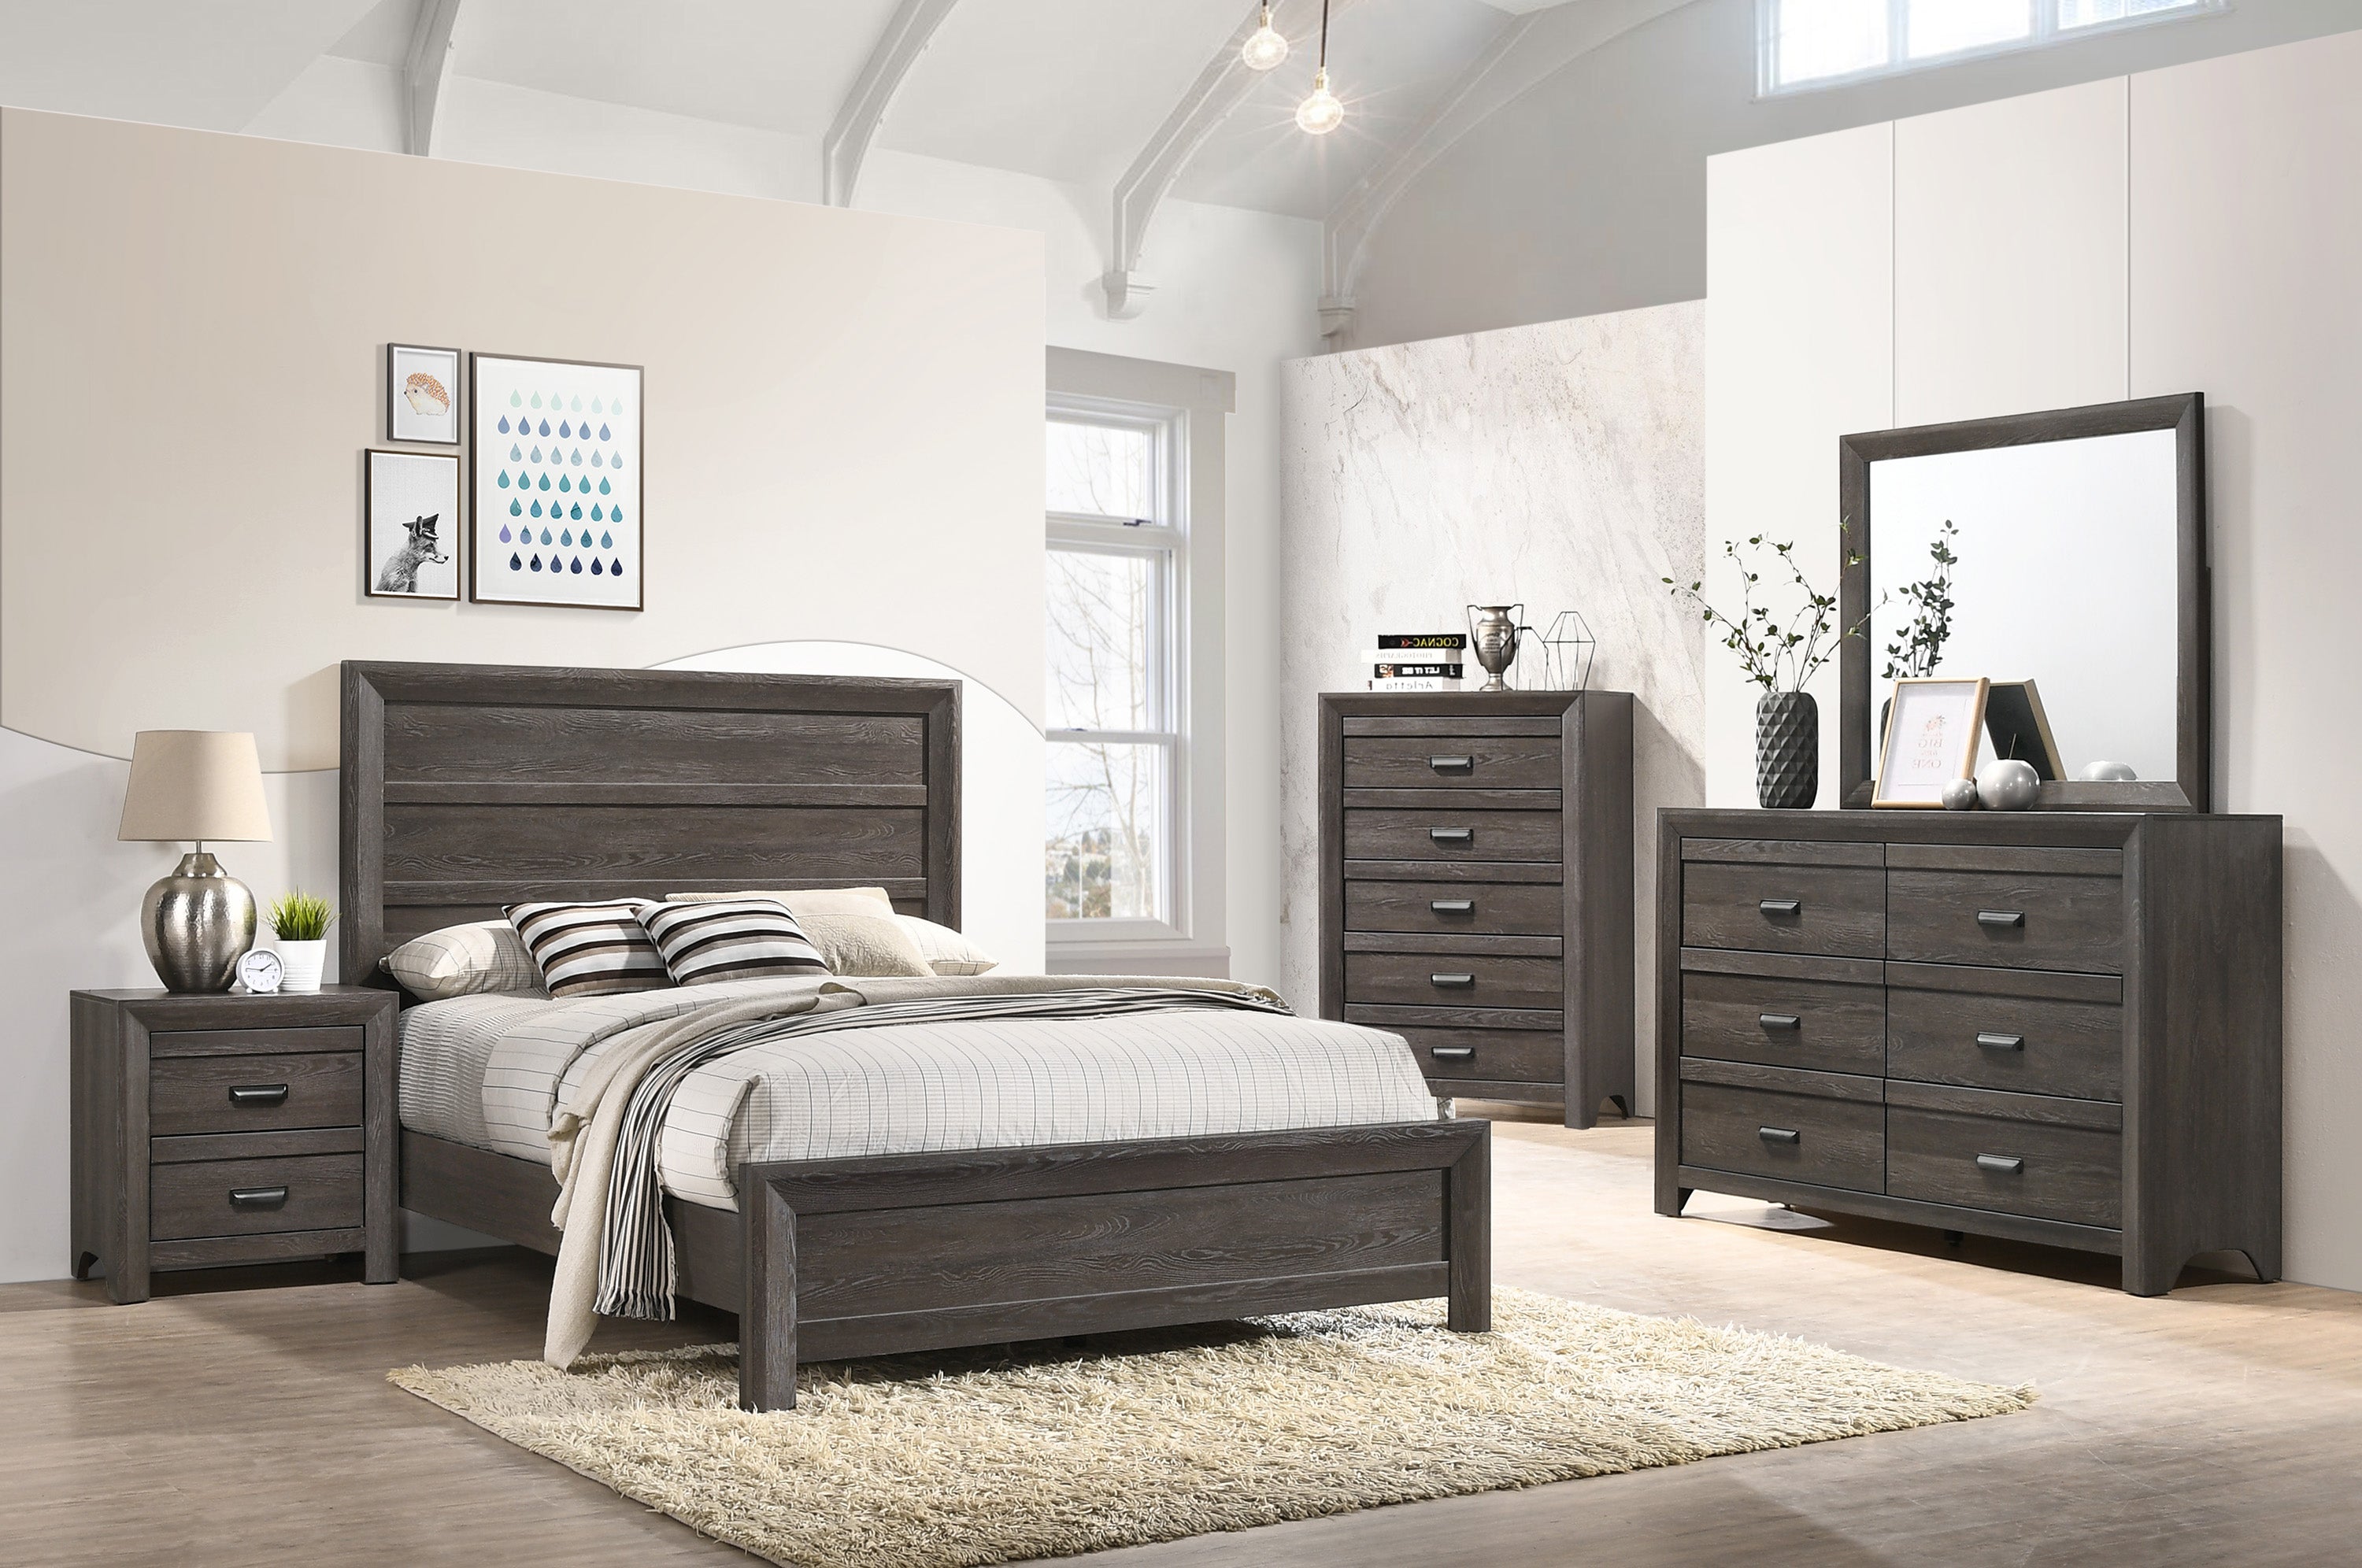 twin bedroom furniture set